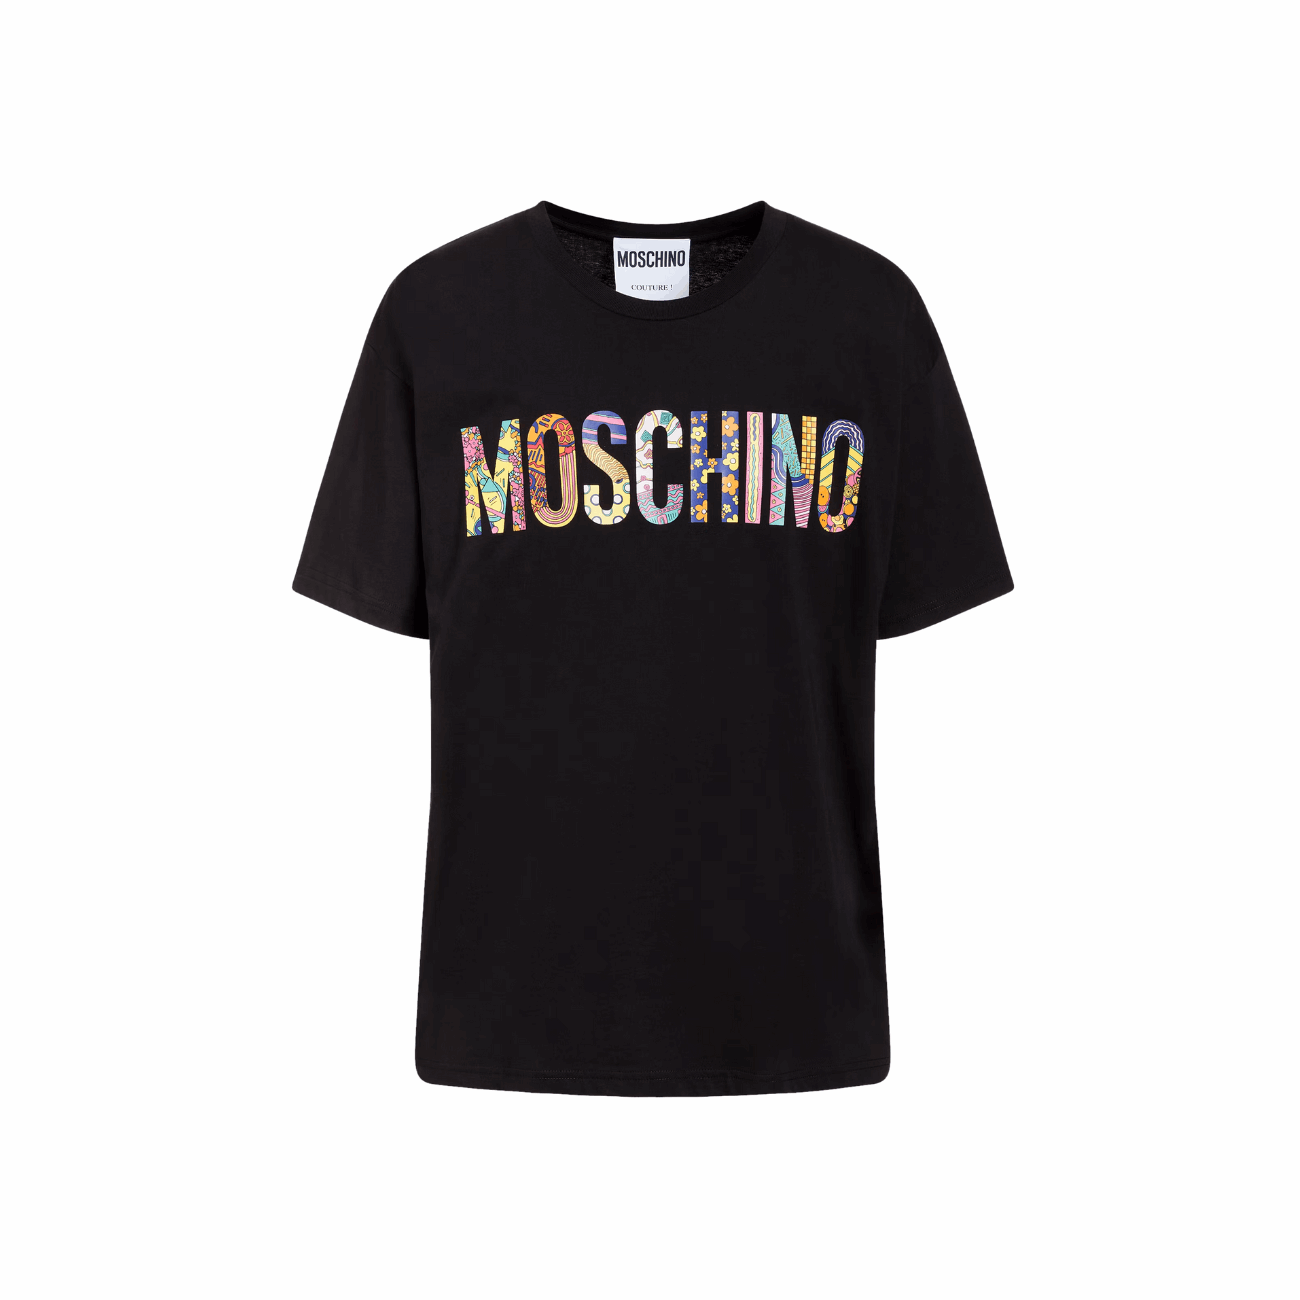 Moschino Couture A0721-0240-1555 Signature Logo Men's T-Shirt, Black